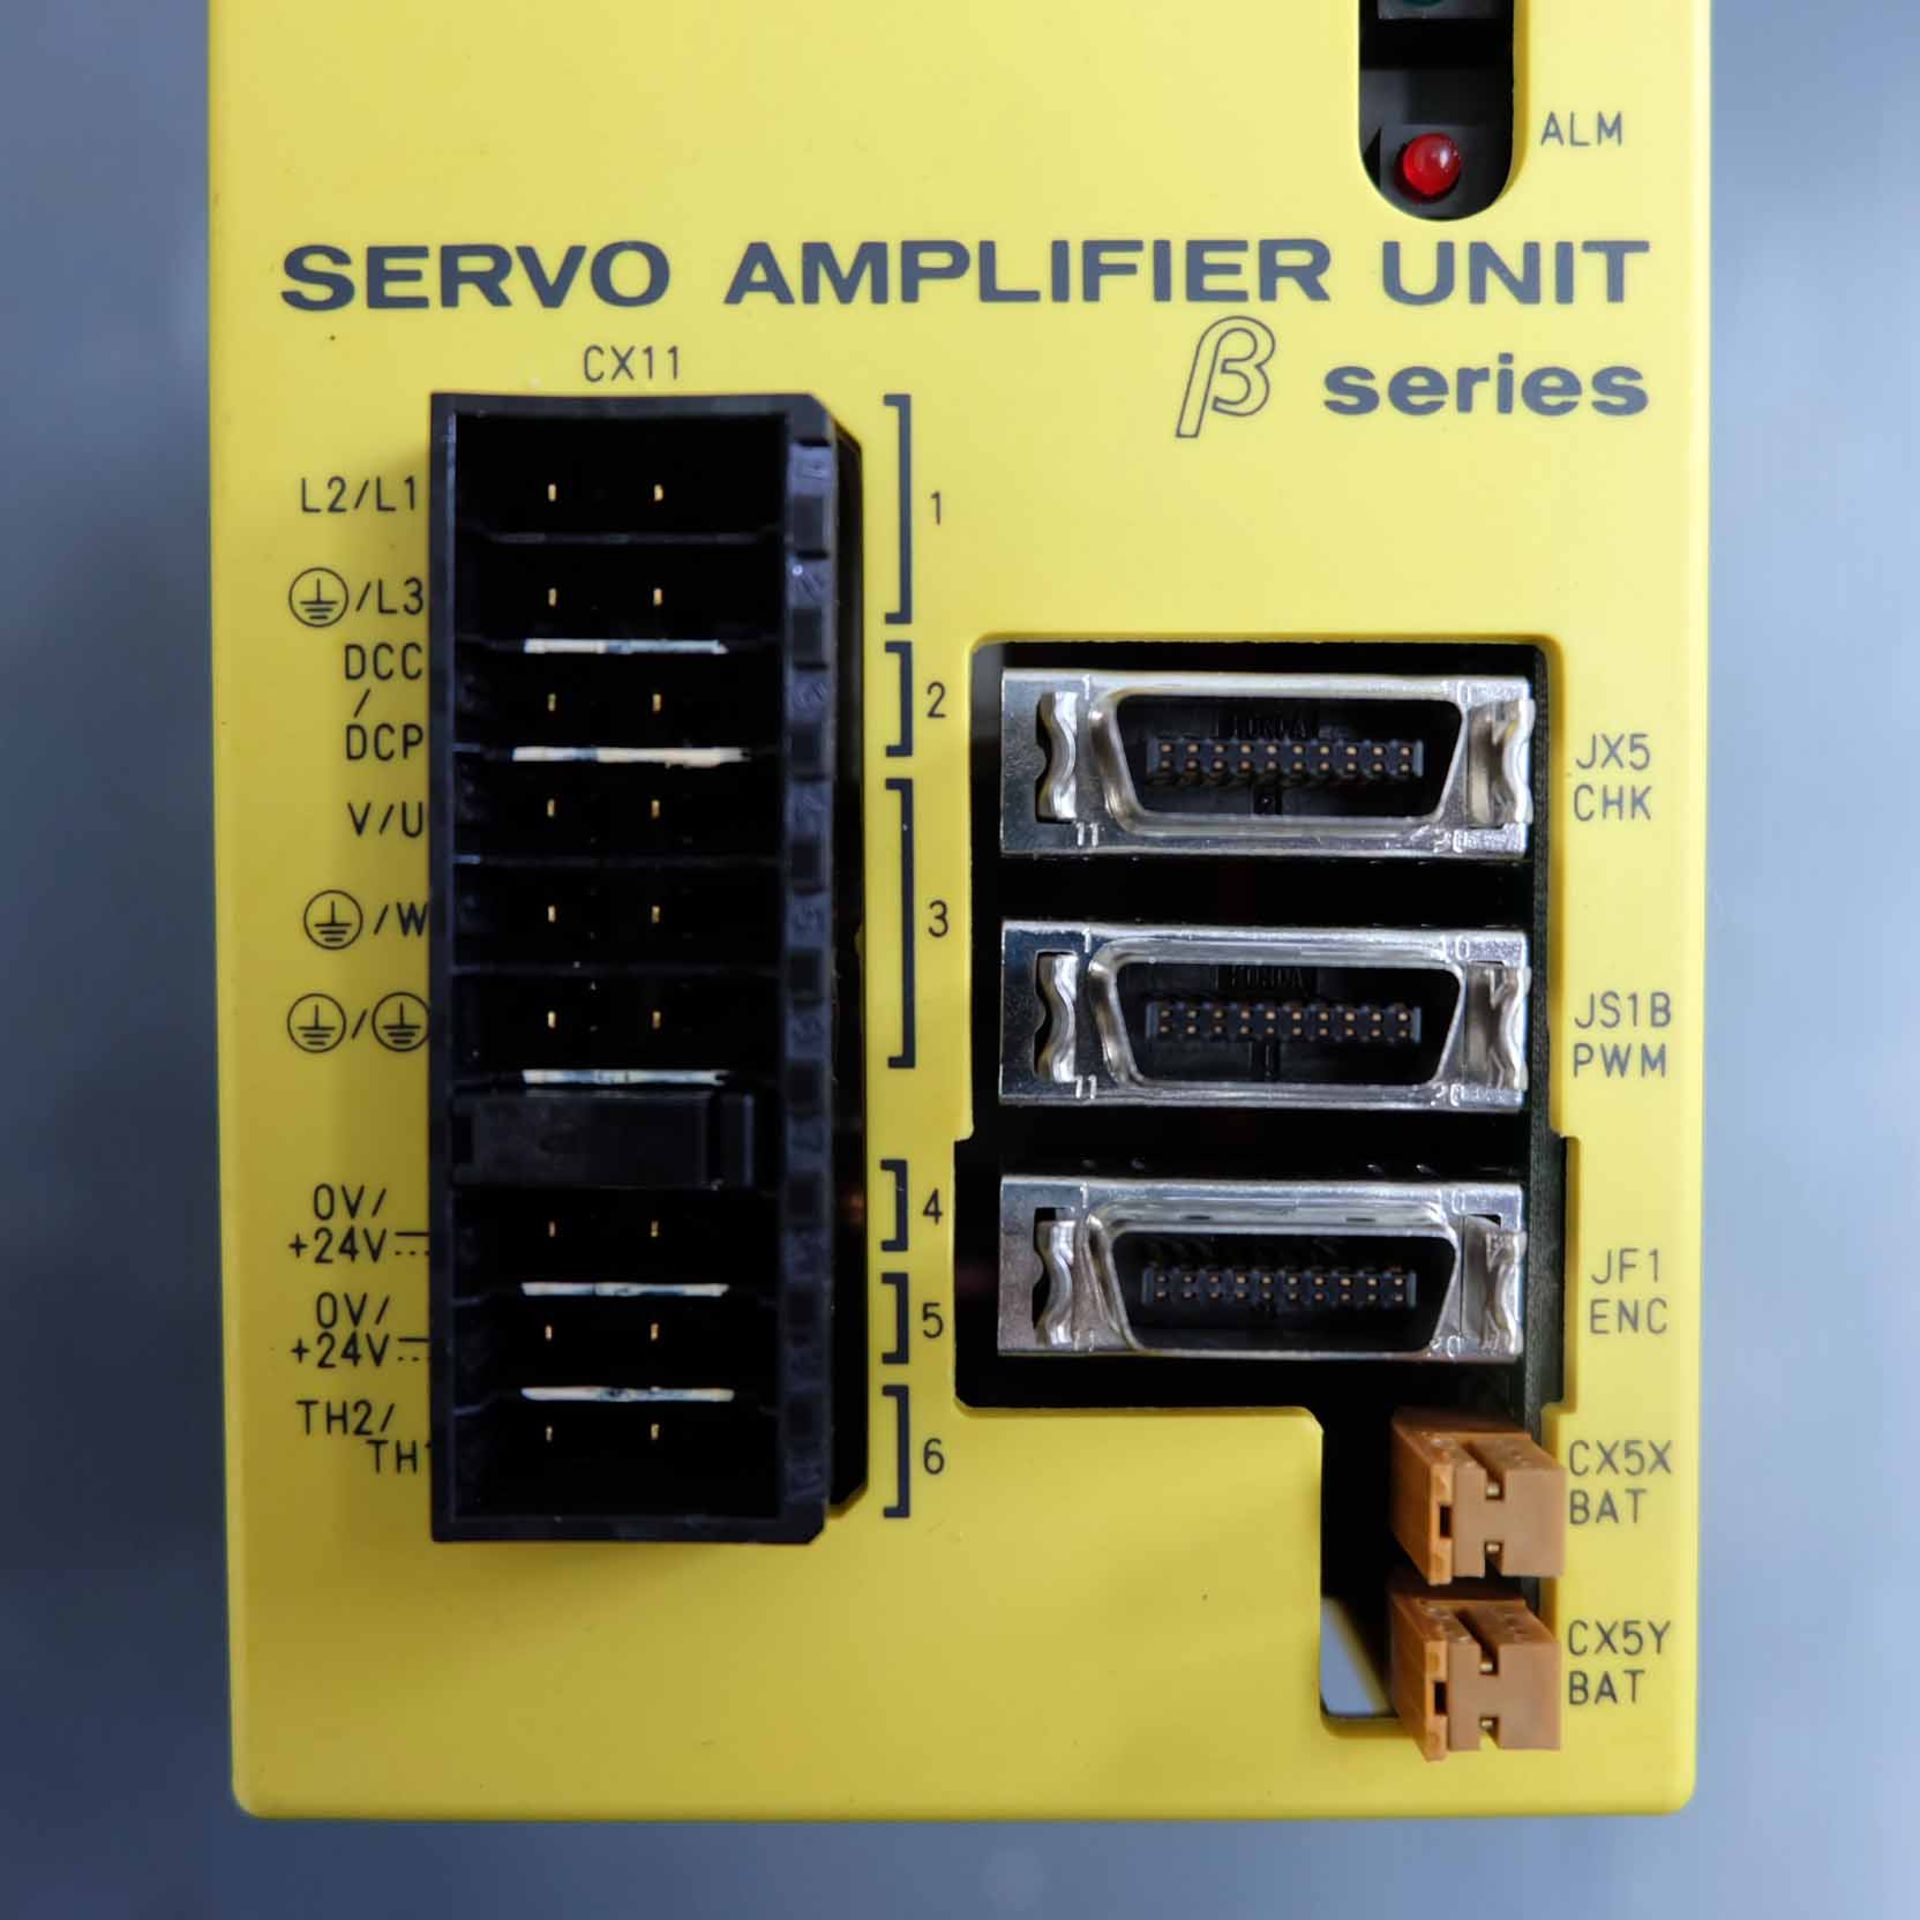 Fanuc Semo Amplifier Unit. B Series. AO6B-6093-H101. SVU 1 - 12. Input 200-240 Volt. PWM Interface. - Image 4 of 7